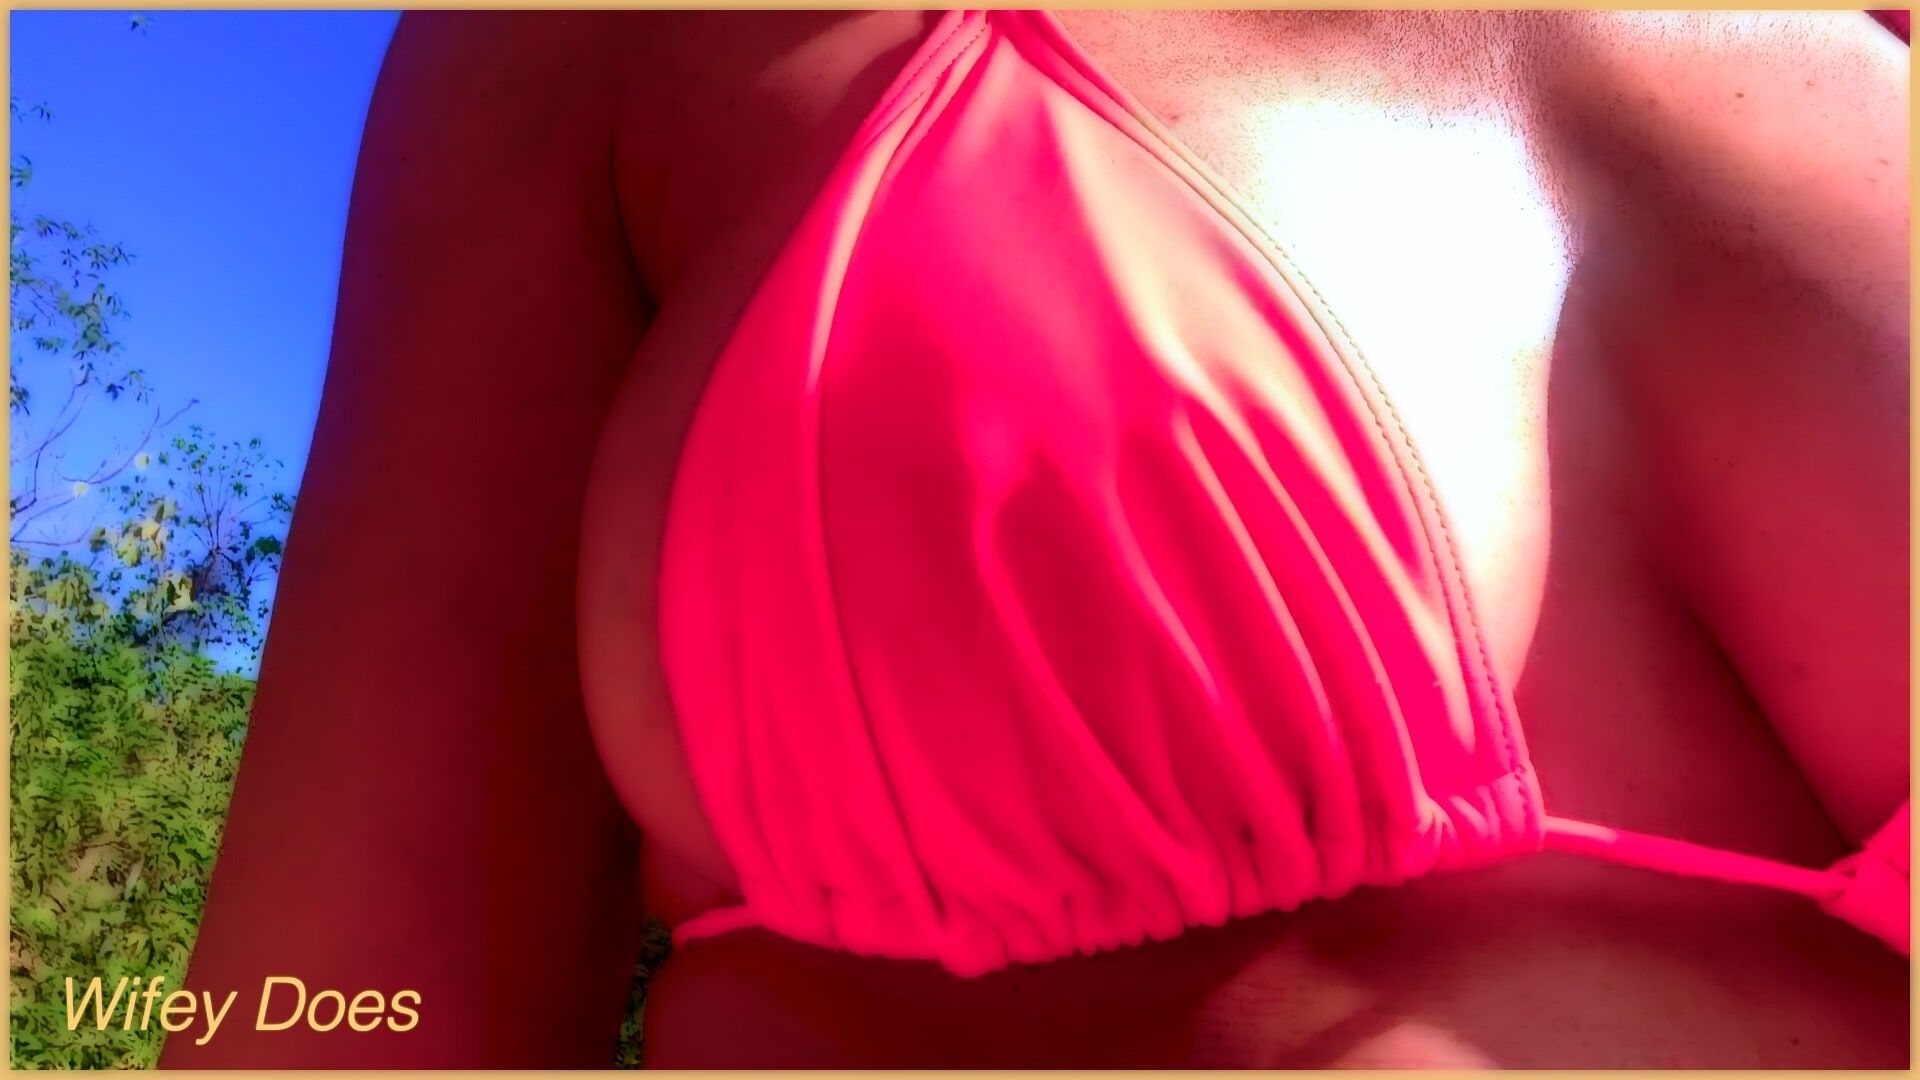 Wifey shows her hot pink bikini #4